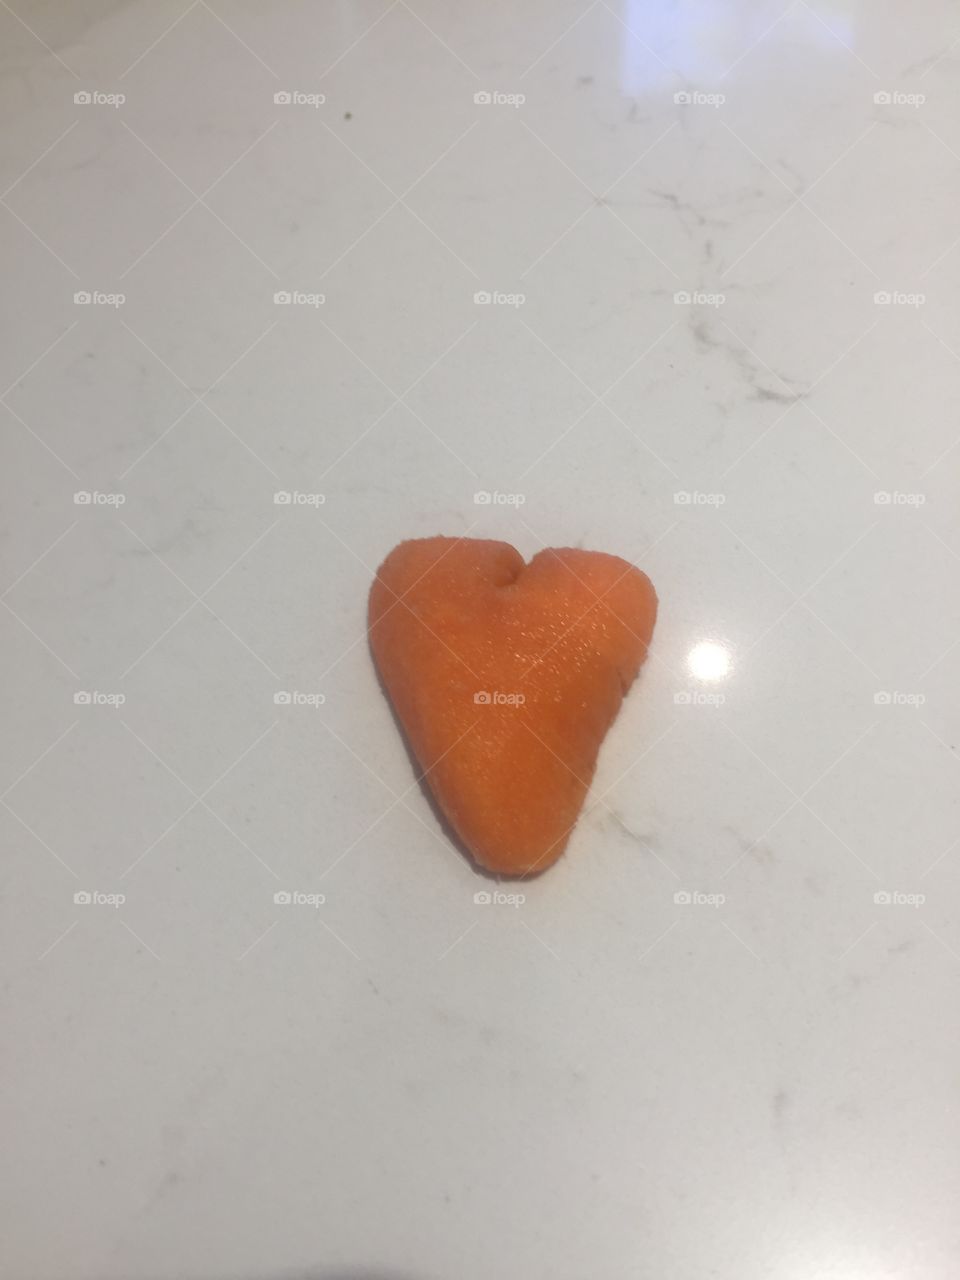 Heart shaped baby carrot